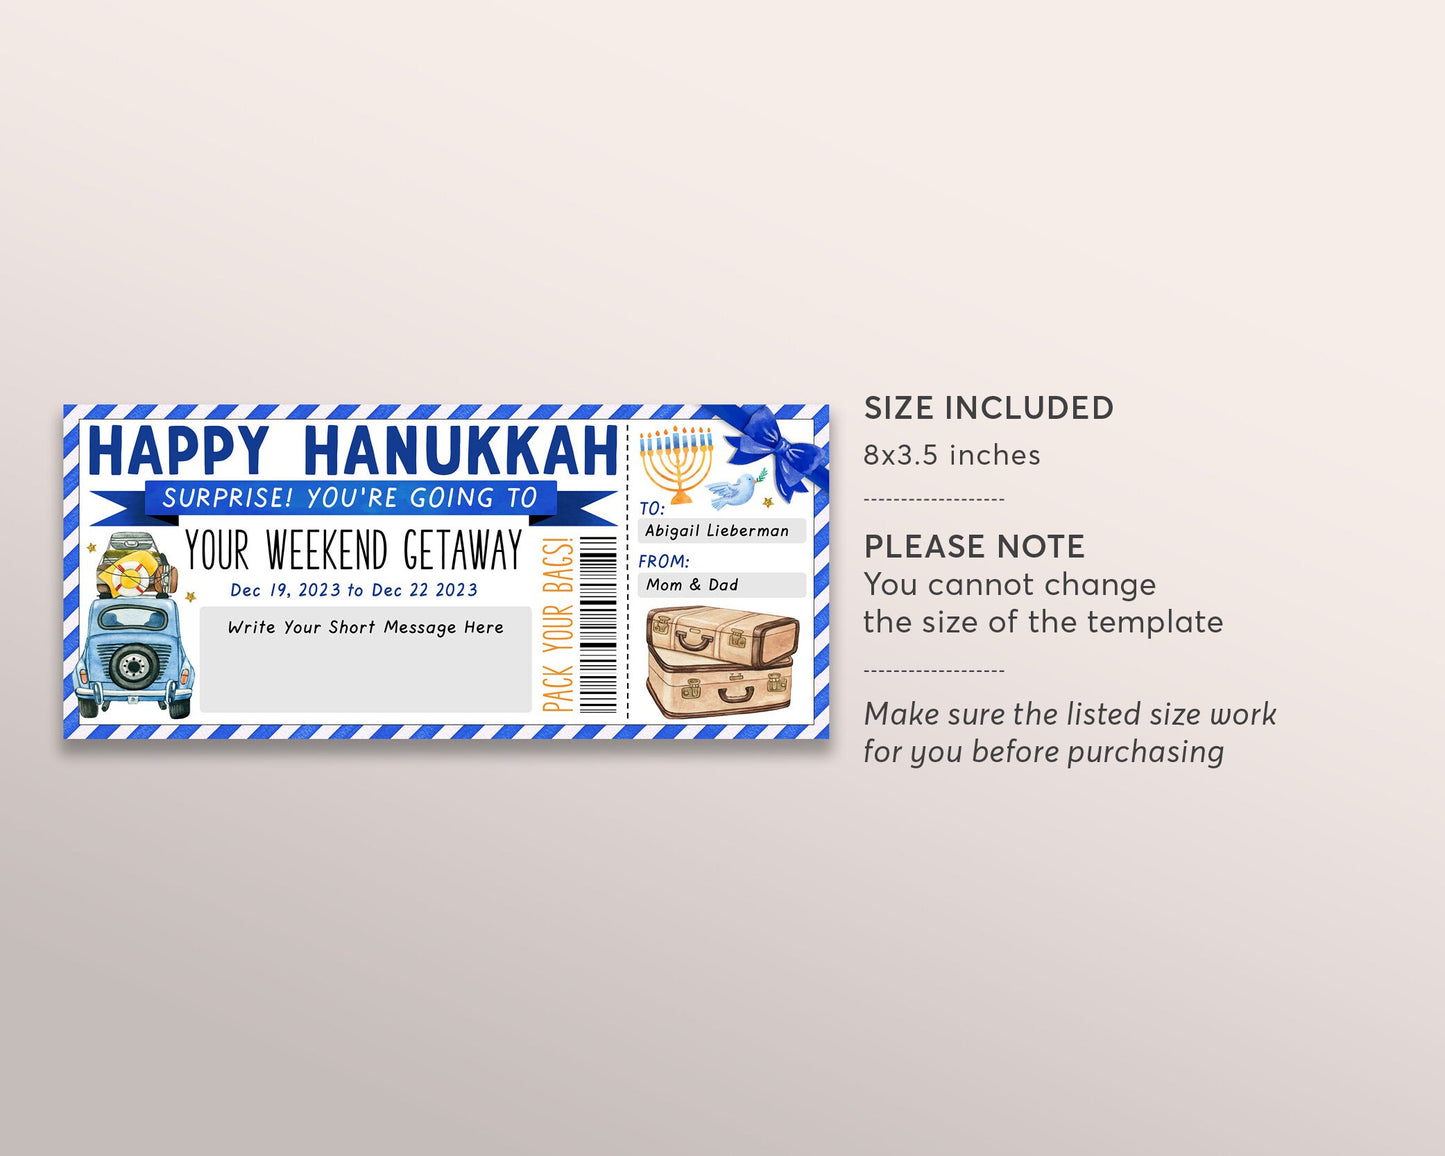 Happy Hanukkah Weekend Getaway Voucher Editable Template, Surprise Chanukah Vacation Travel Ticket Gift Certificate Road Trip Staycation